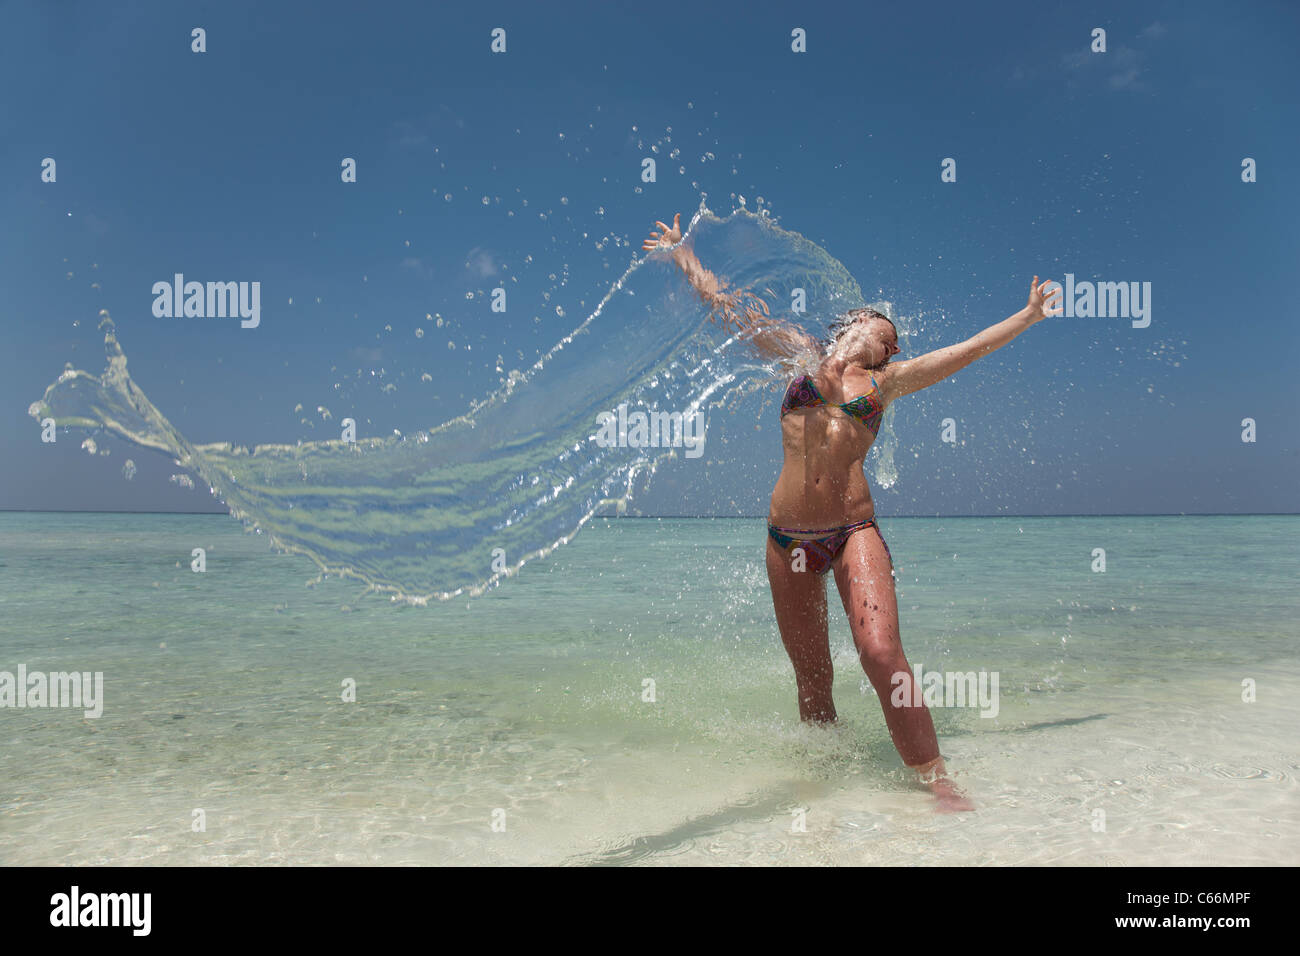 Woman splashing in water at beach Stock Photo